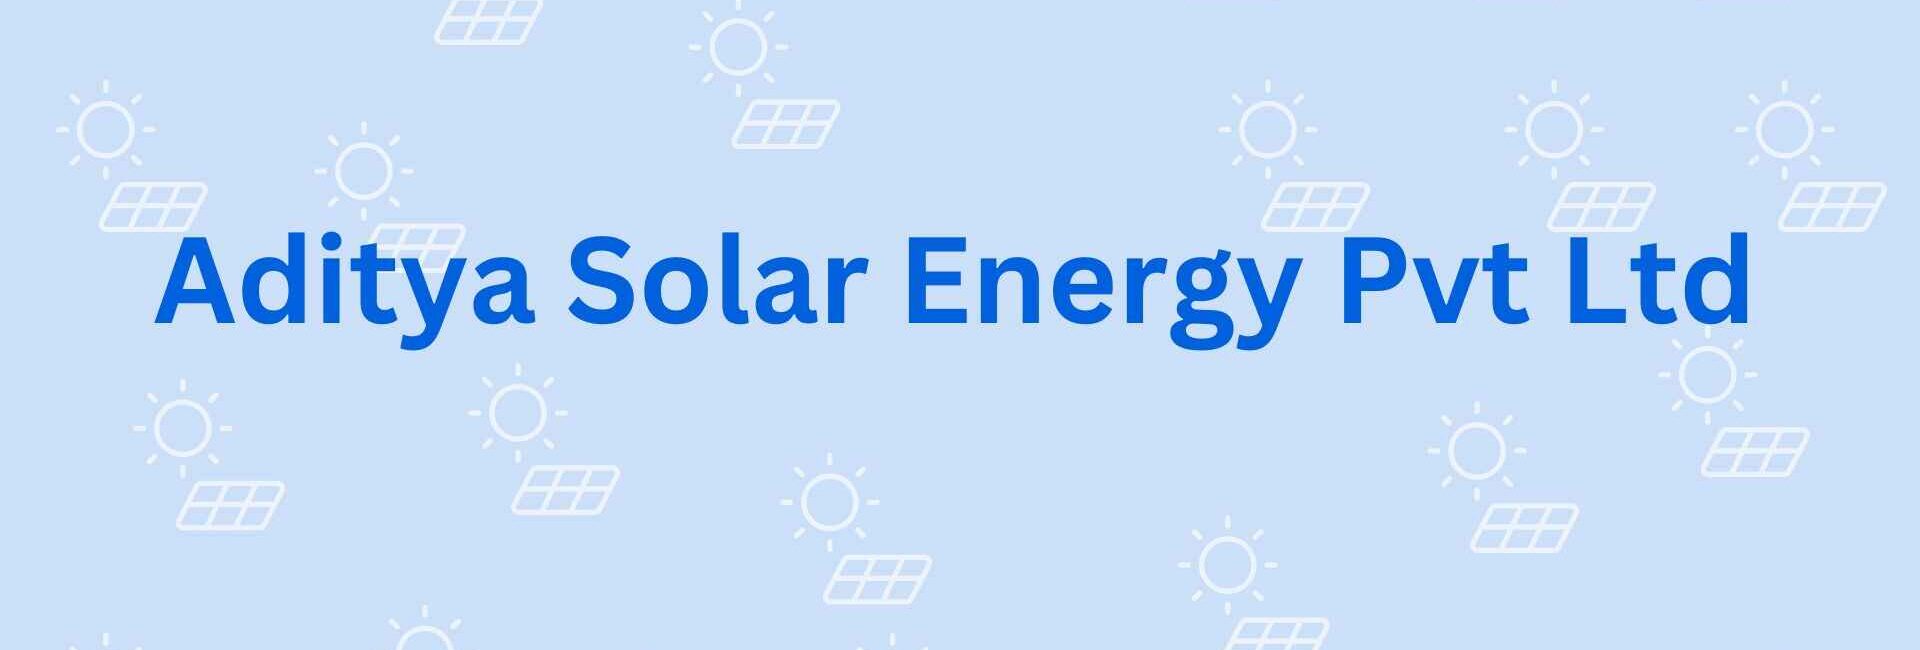 Aditya Solar Energy Pvt Ltd - Solar Dealer in Noida